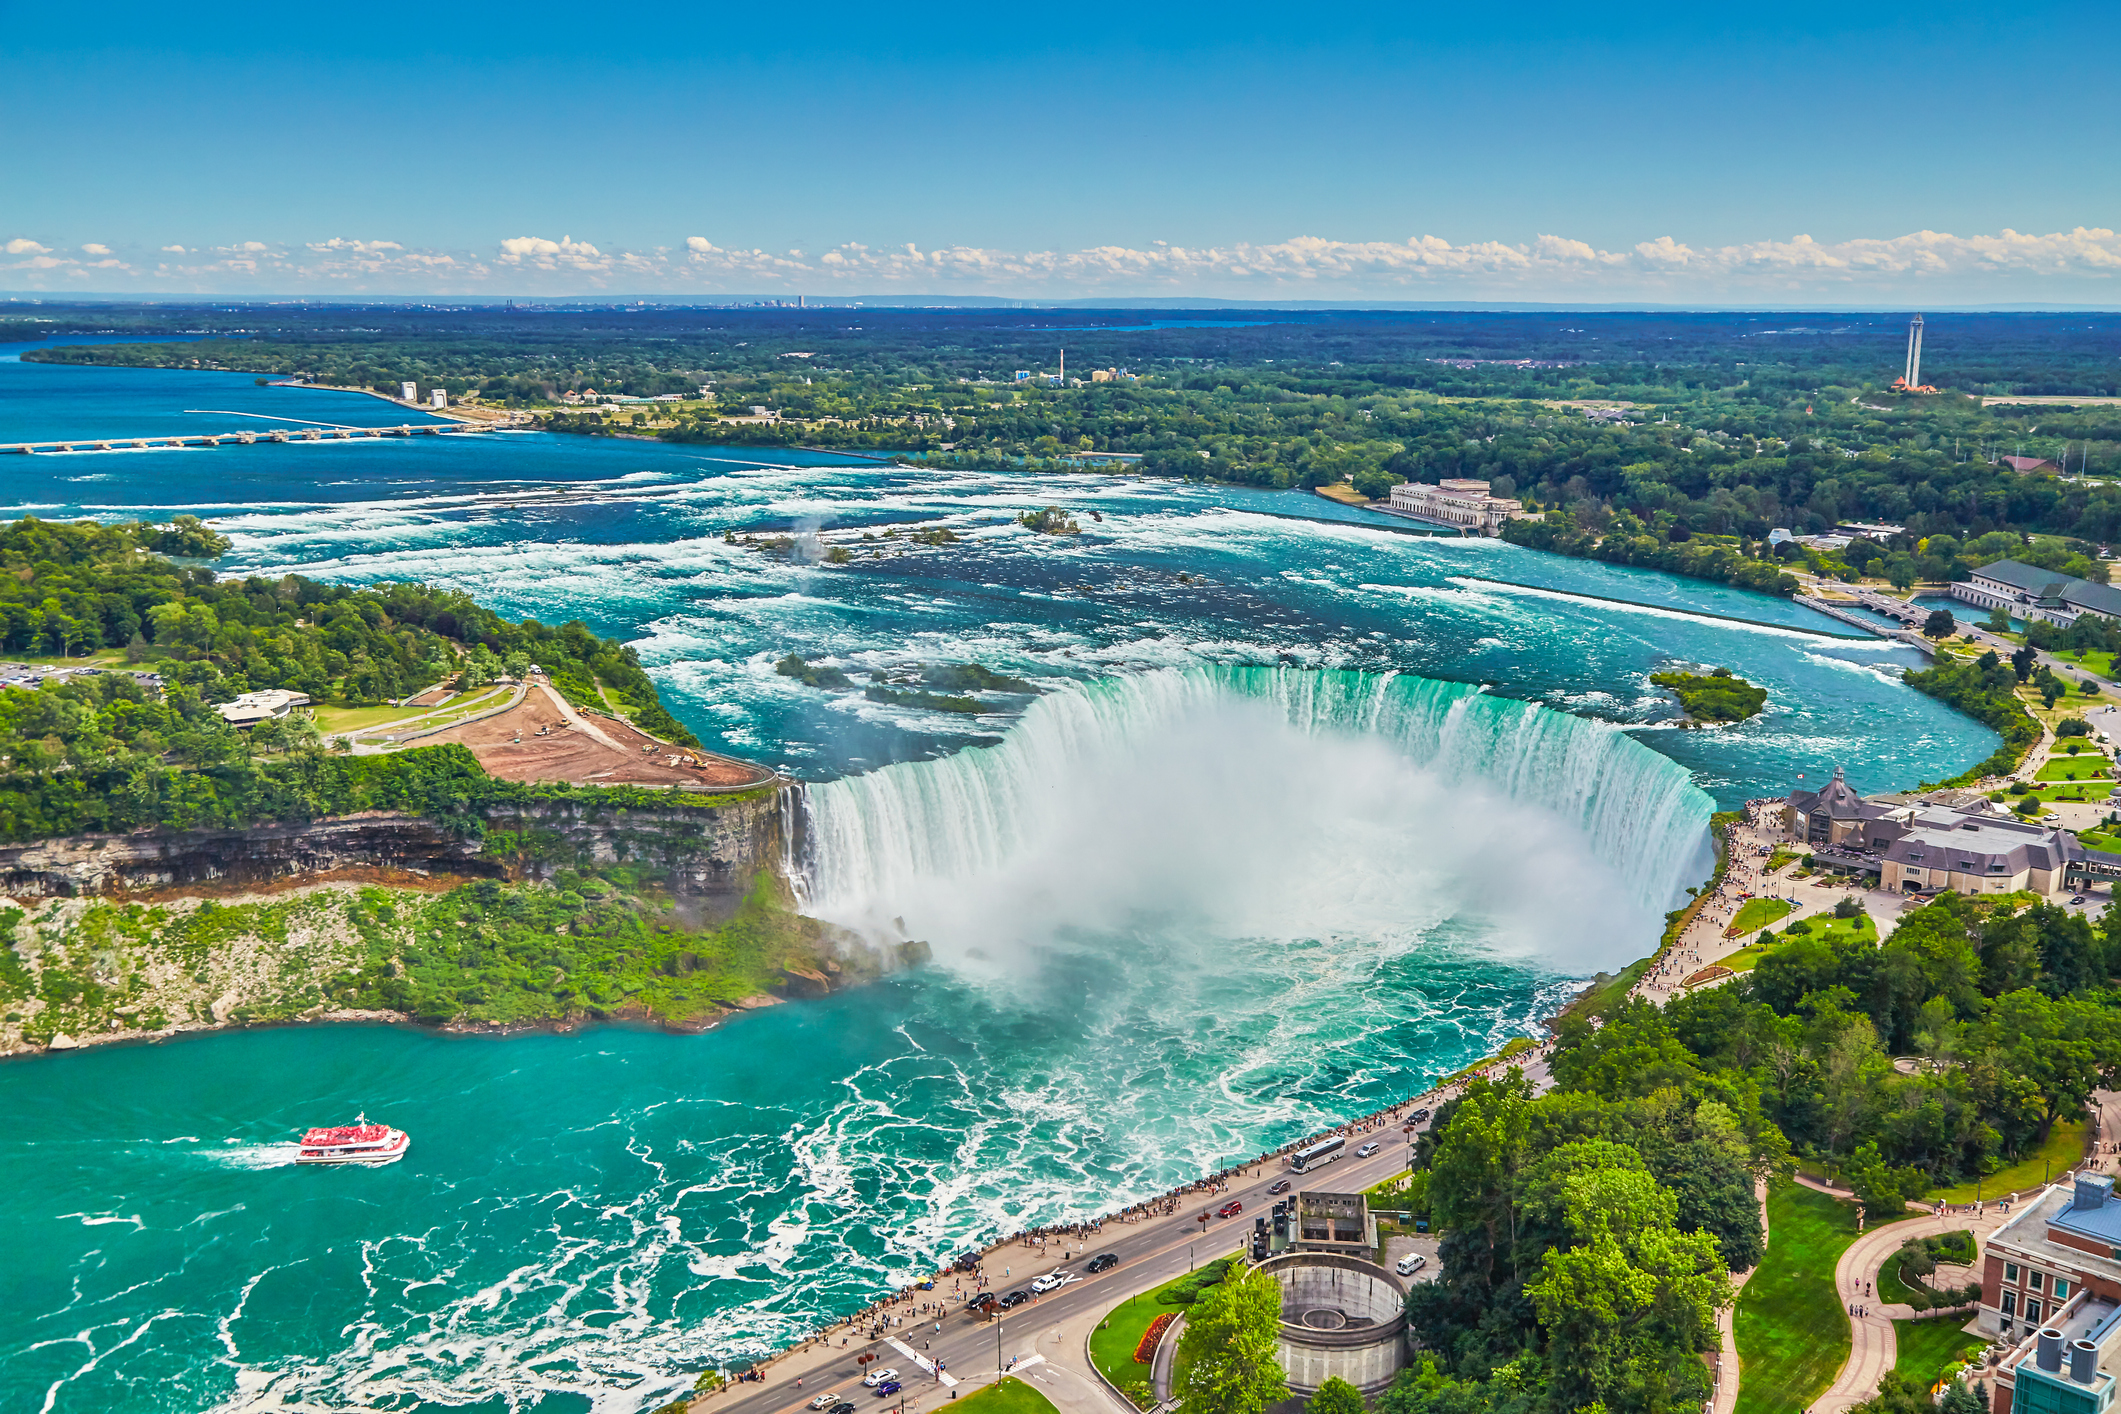 Niagara waterfalls with Horse shoe falls and a boat